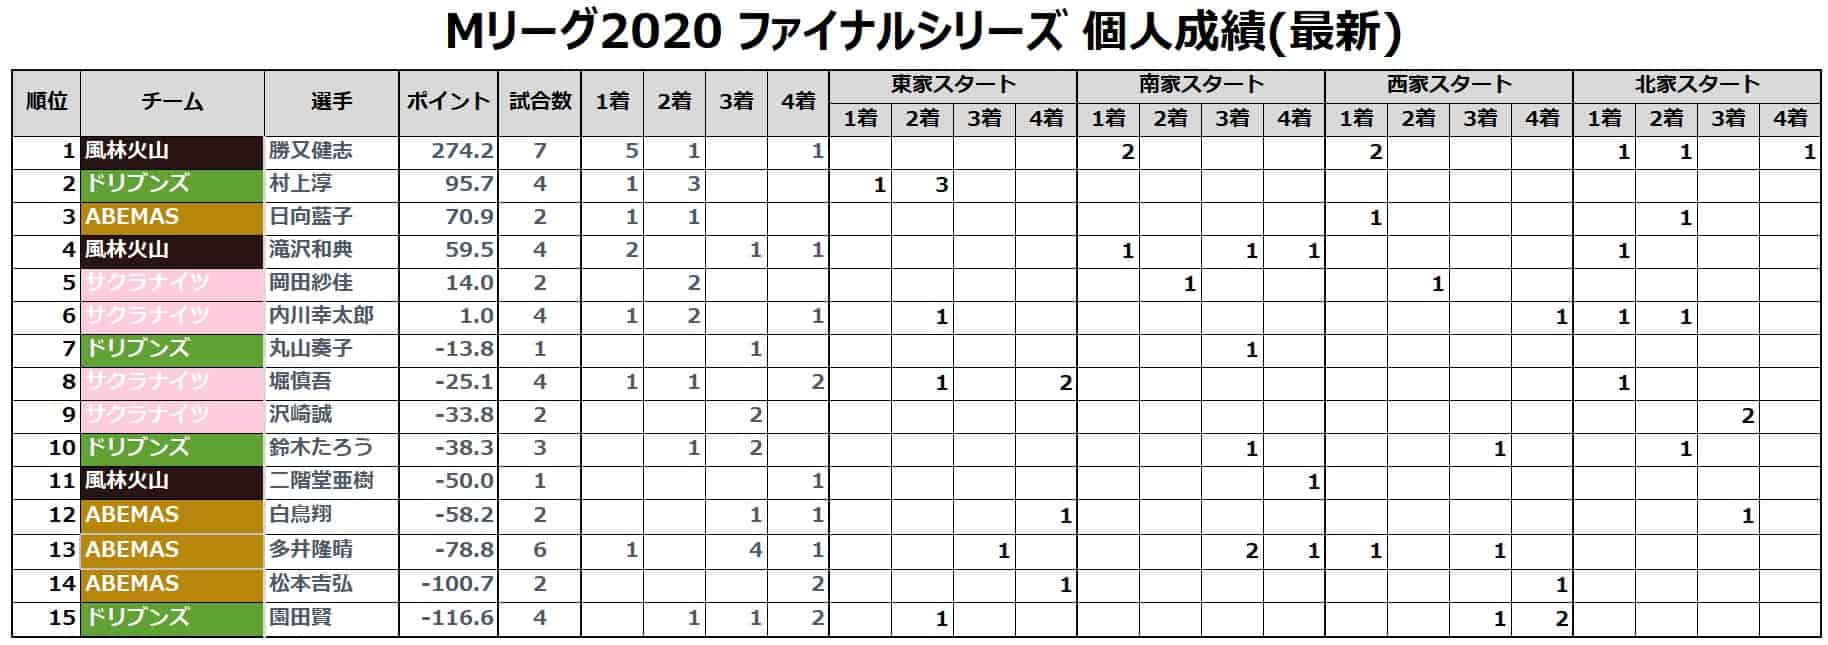 M-League2020final_ ranking_personal20210518